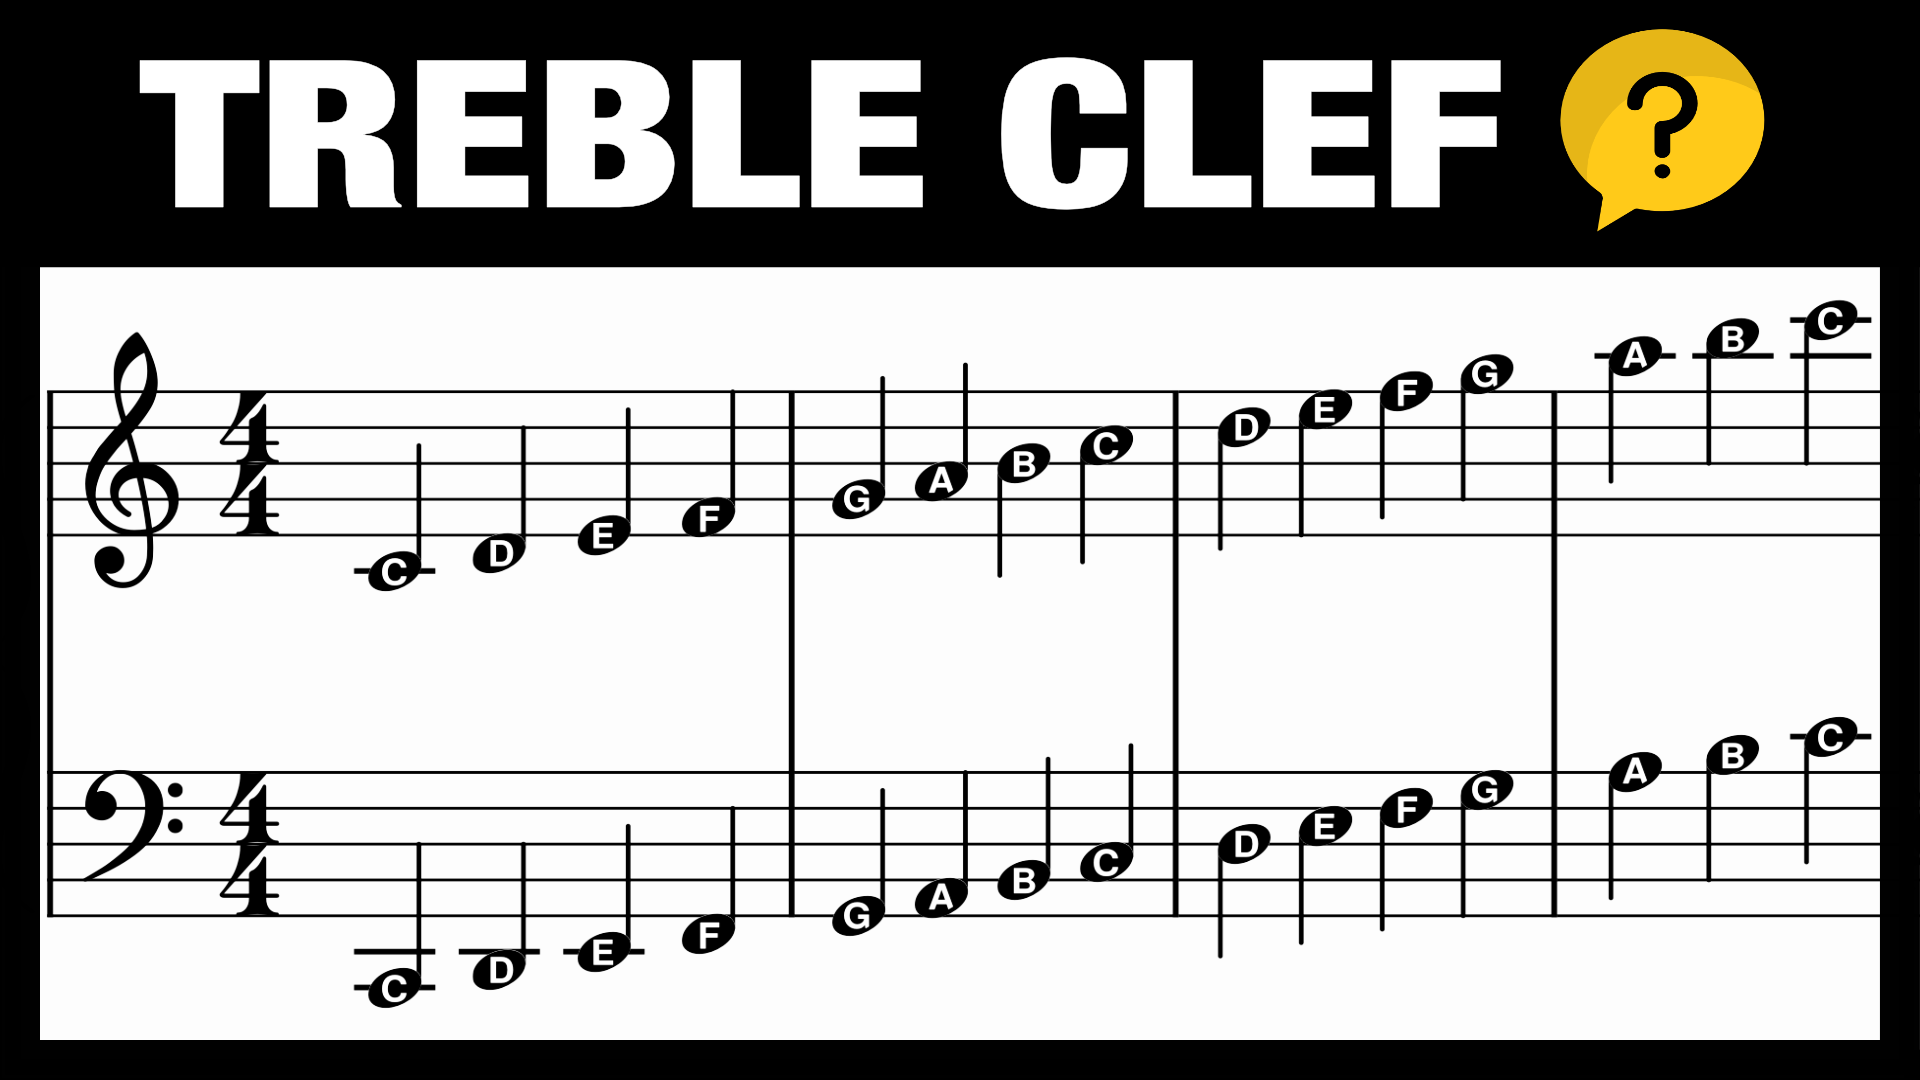 treble clef notes ledger lines